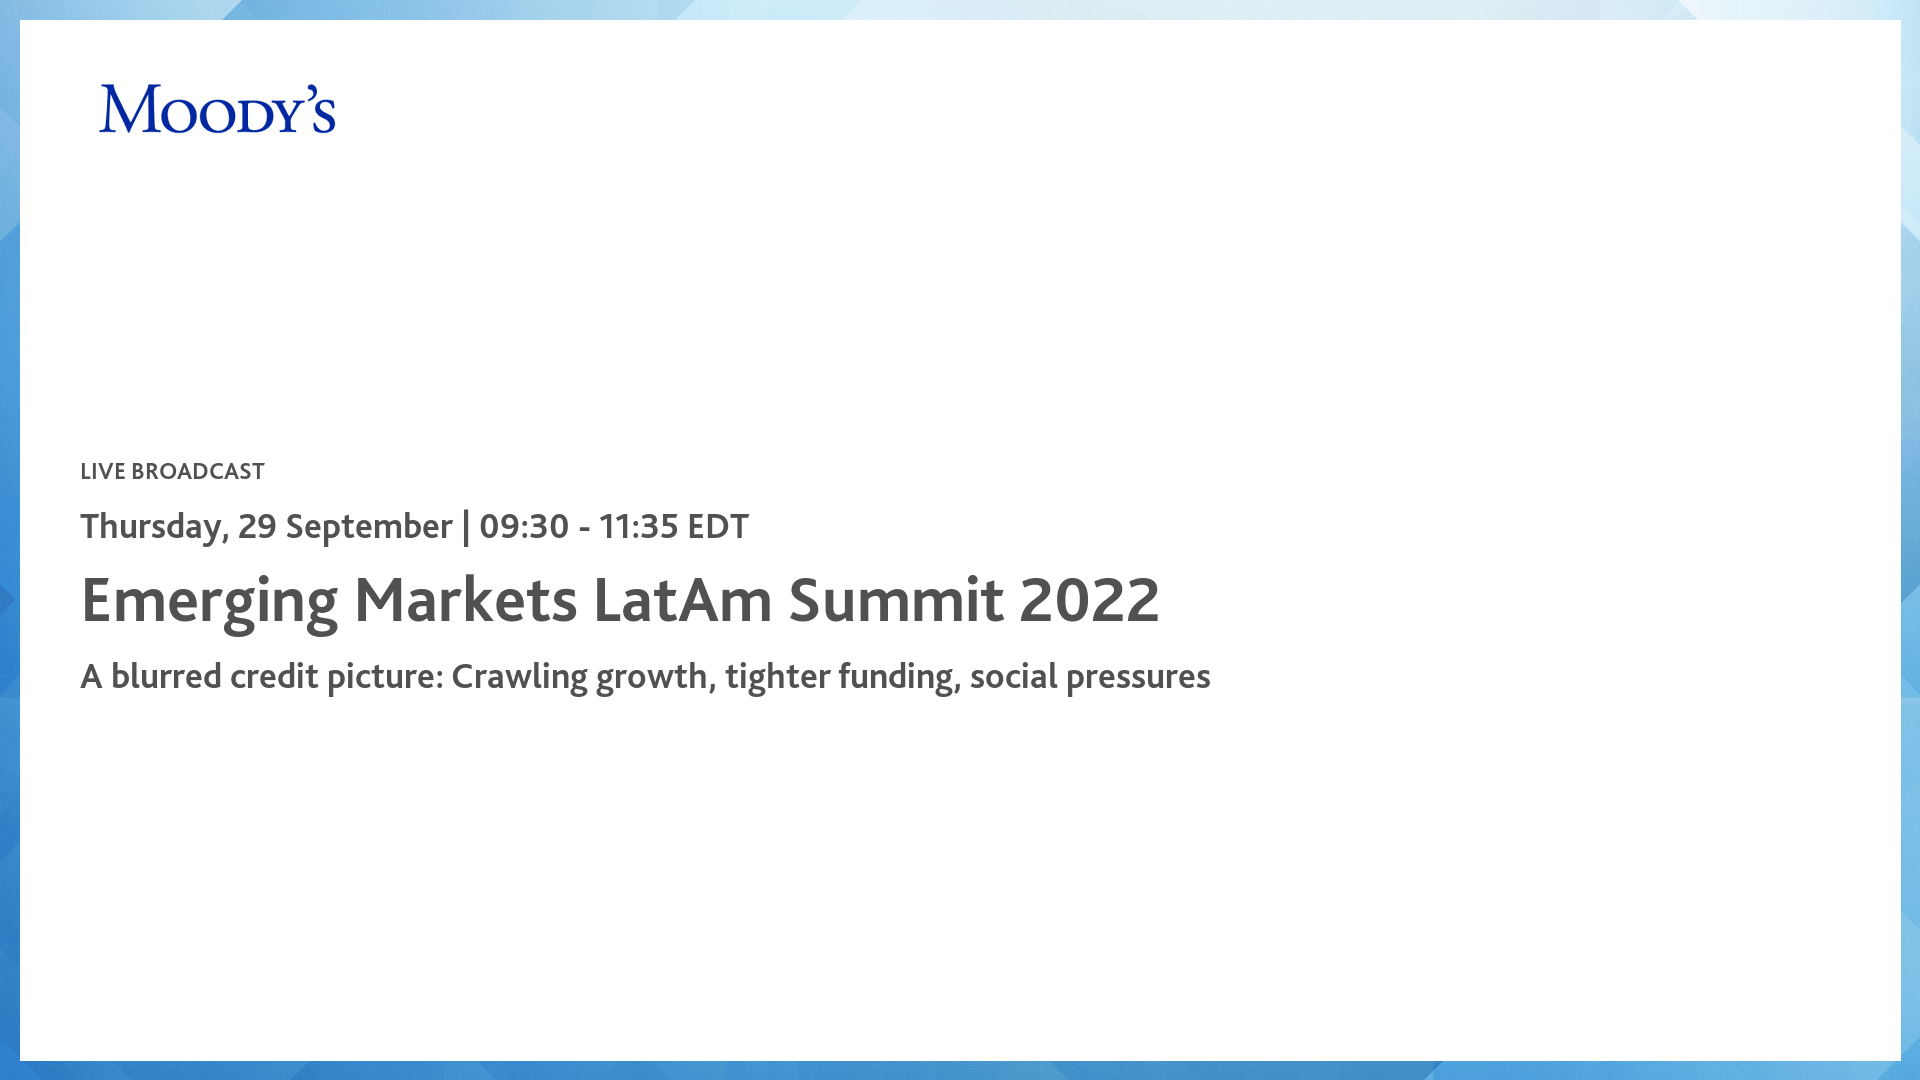 Emerging Markets LatAm Summit 2022